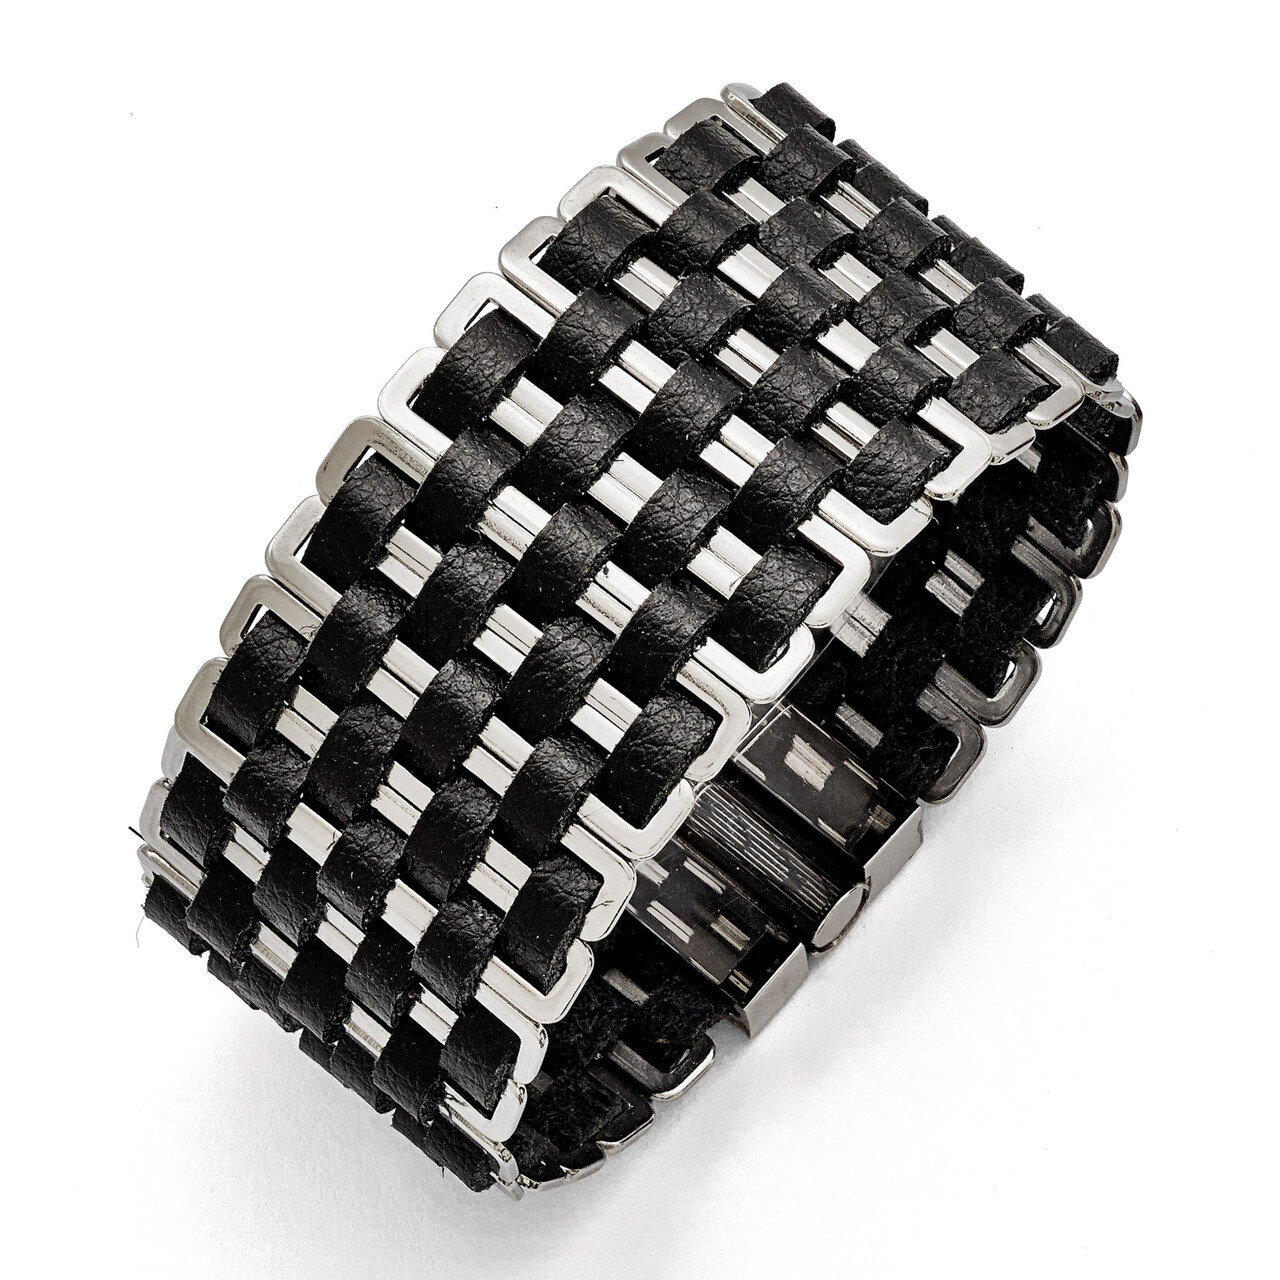 Polished Woven Black Leather Bracelet - Stainless Steel SRB1565